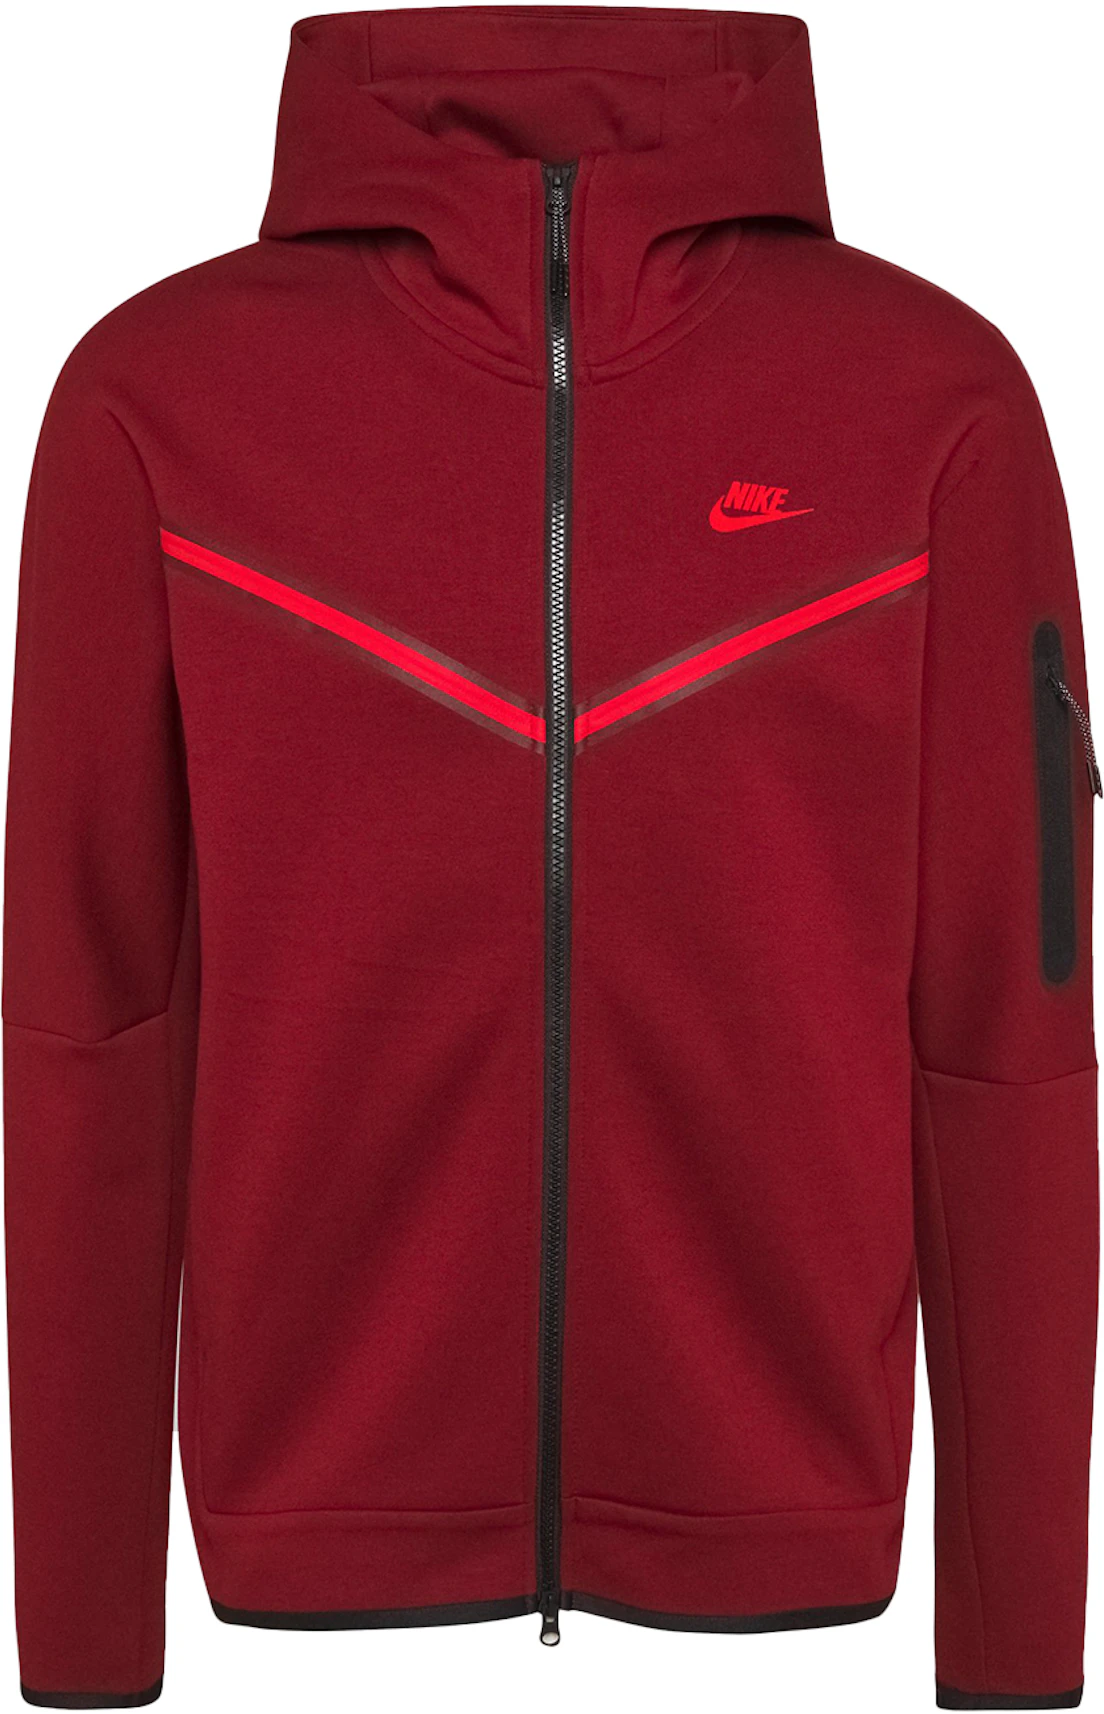 Nike Tech Fleece Team Red/Black - ES